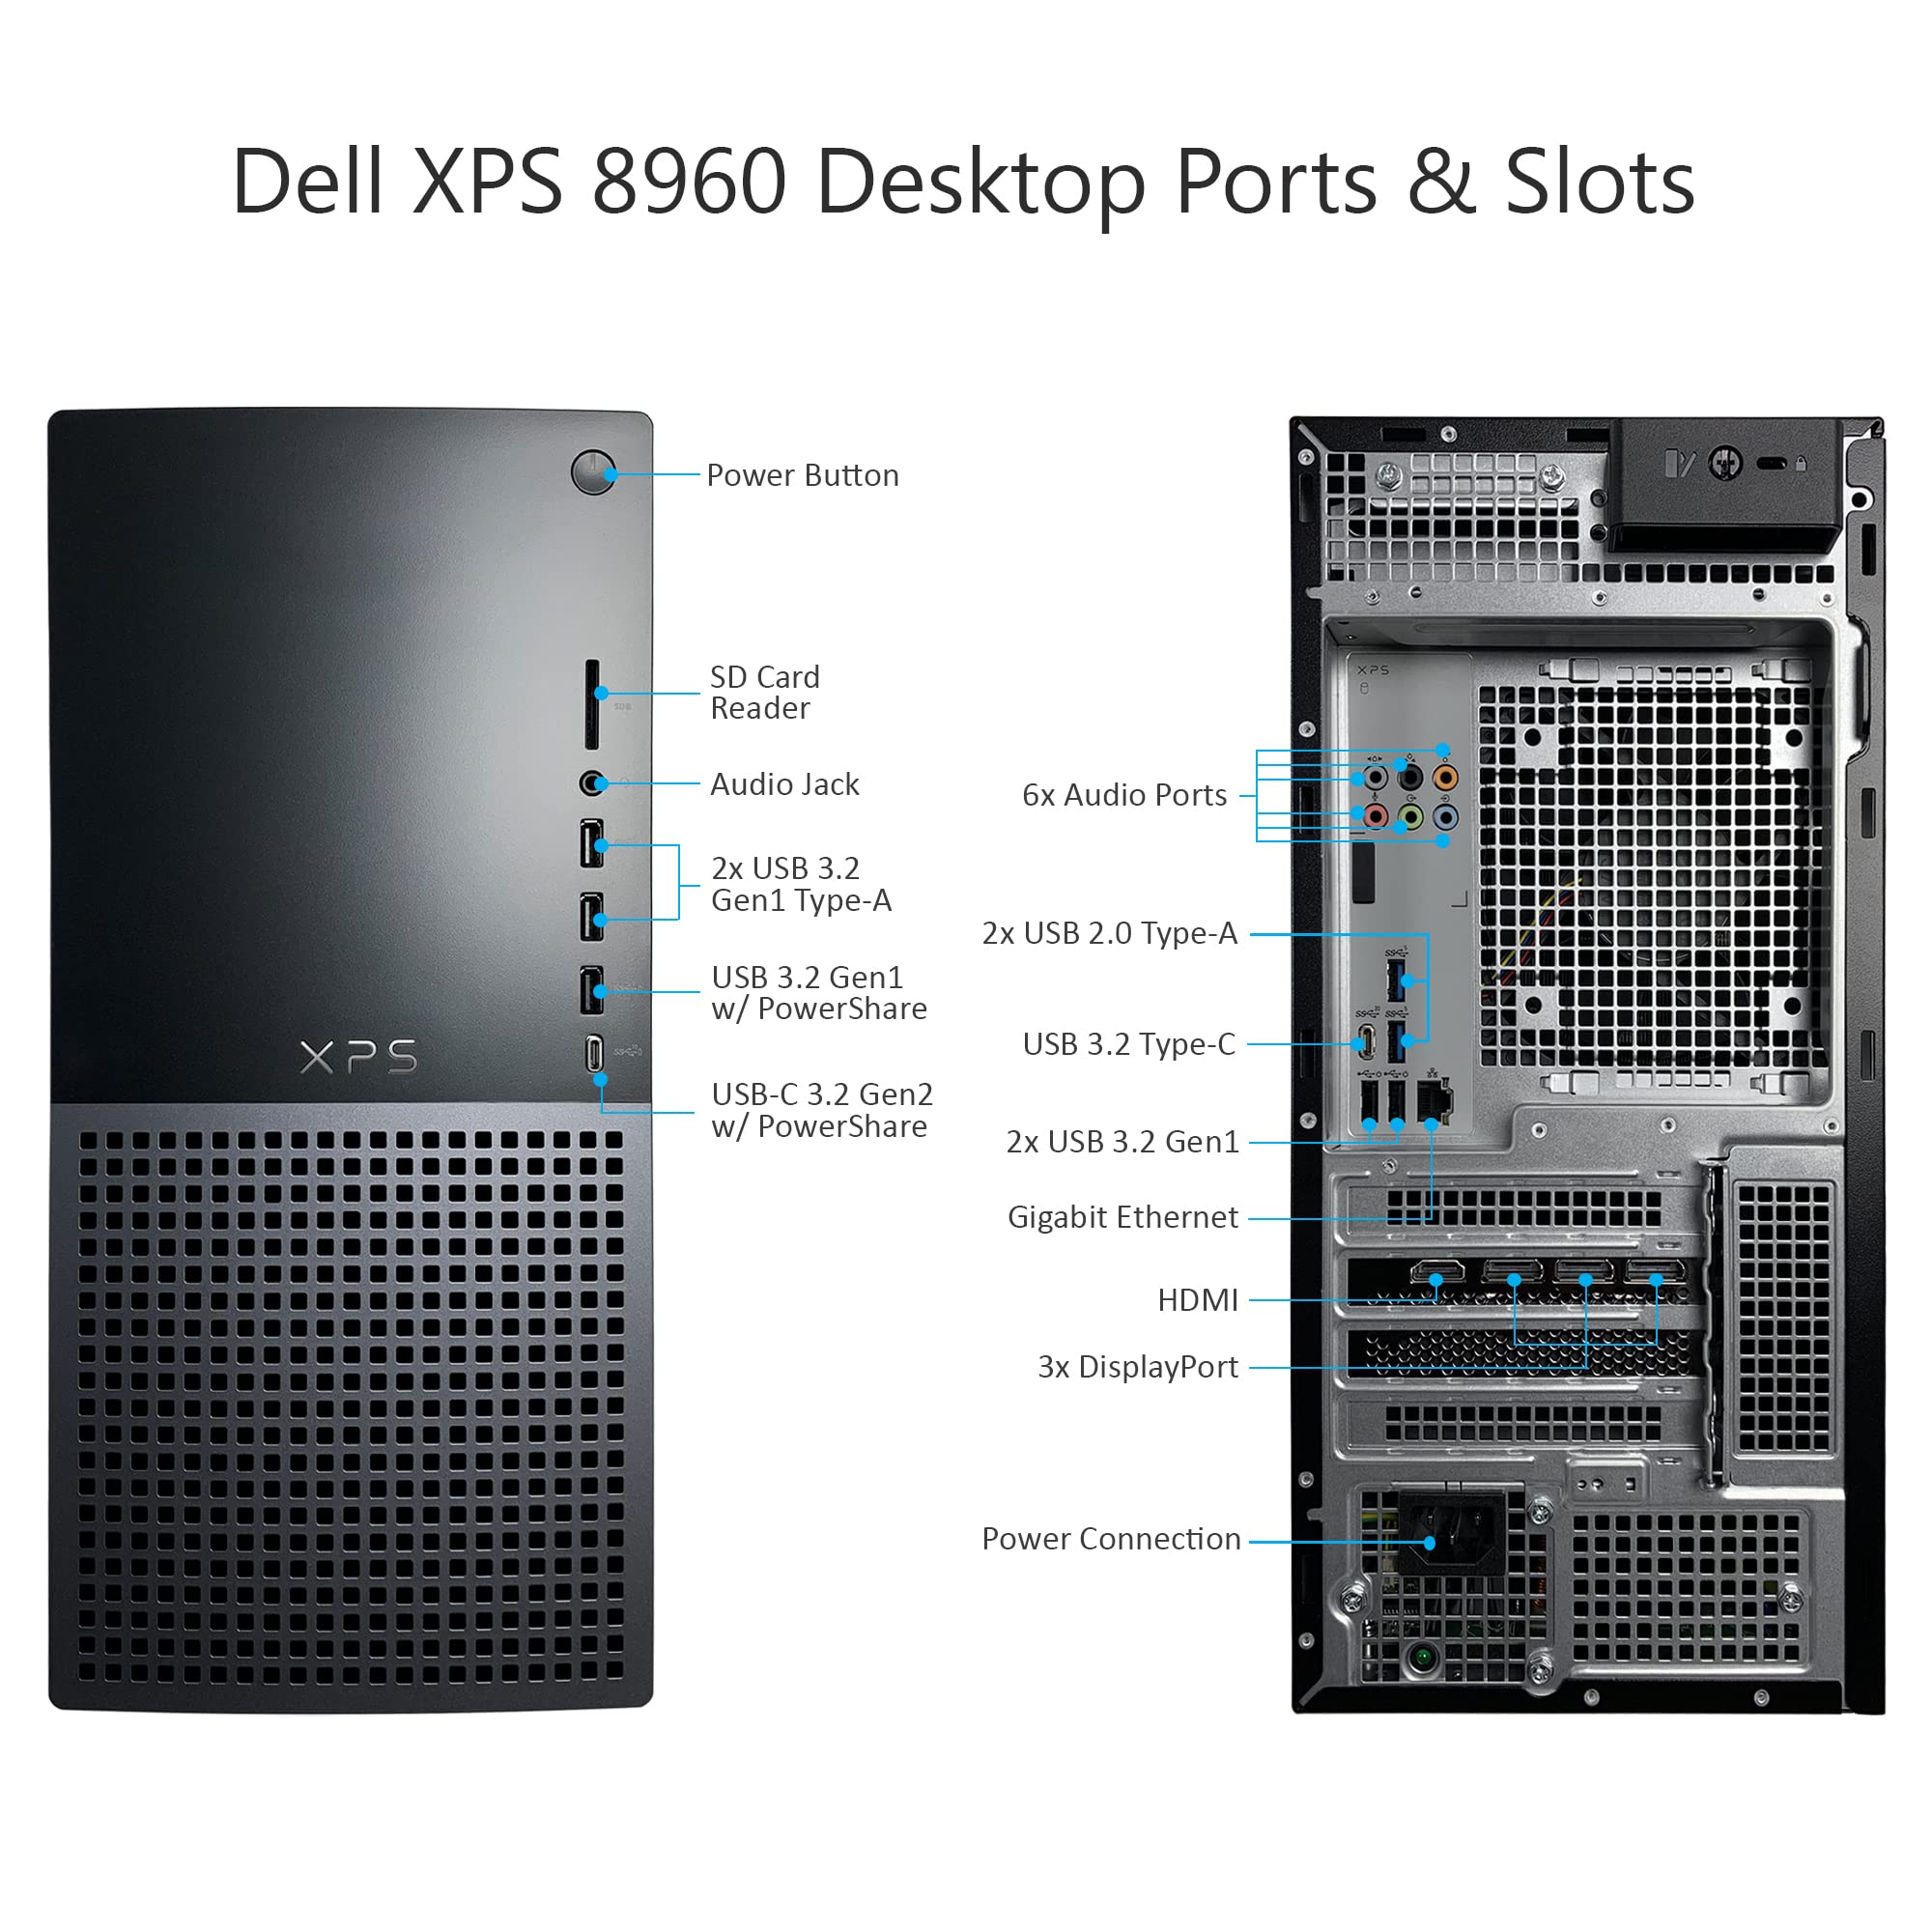 Dell XPS 8960 Gaming Desktop Computer - 13th Gen Intel Core i9-13900K 24-Core up to 5.80 GHz CPU, 64GB DDR5 RAM, 2TB NVMe SSD + 12TB HDD, GeForce RTX 3070 8GB GDDR6, Killer Wi-Fi 6E, Windows 11 Pro